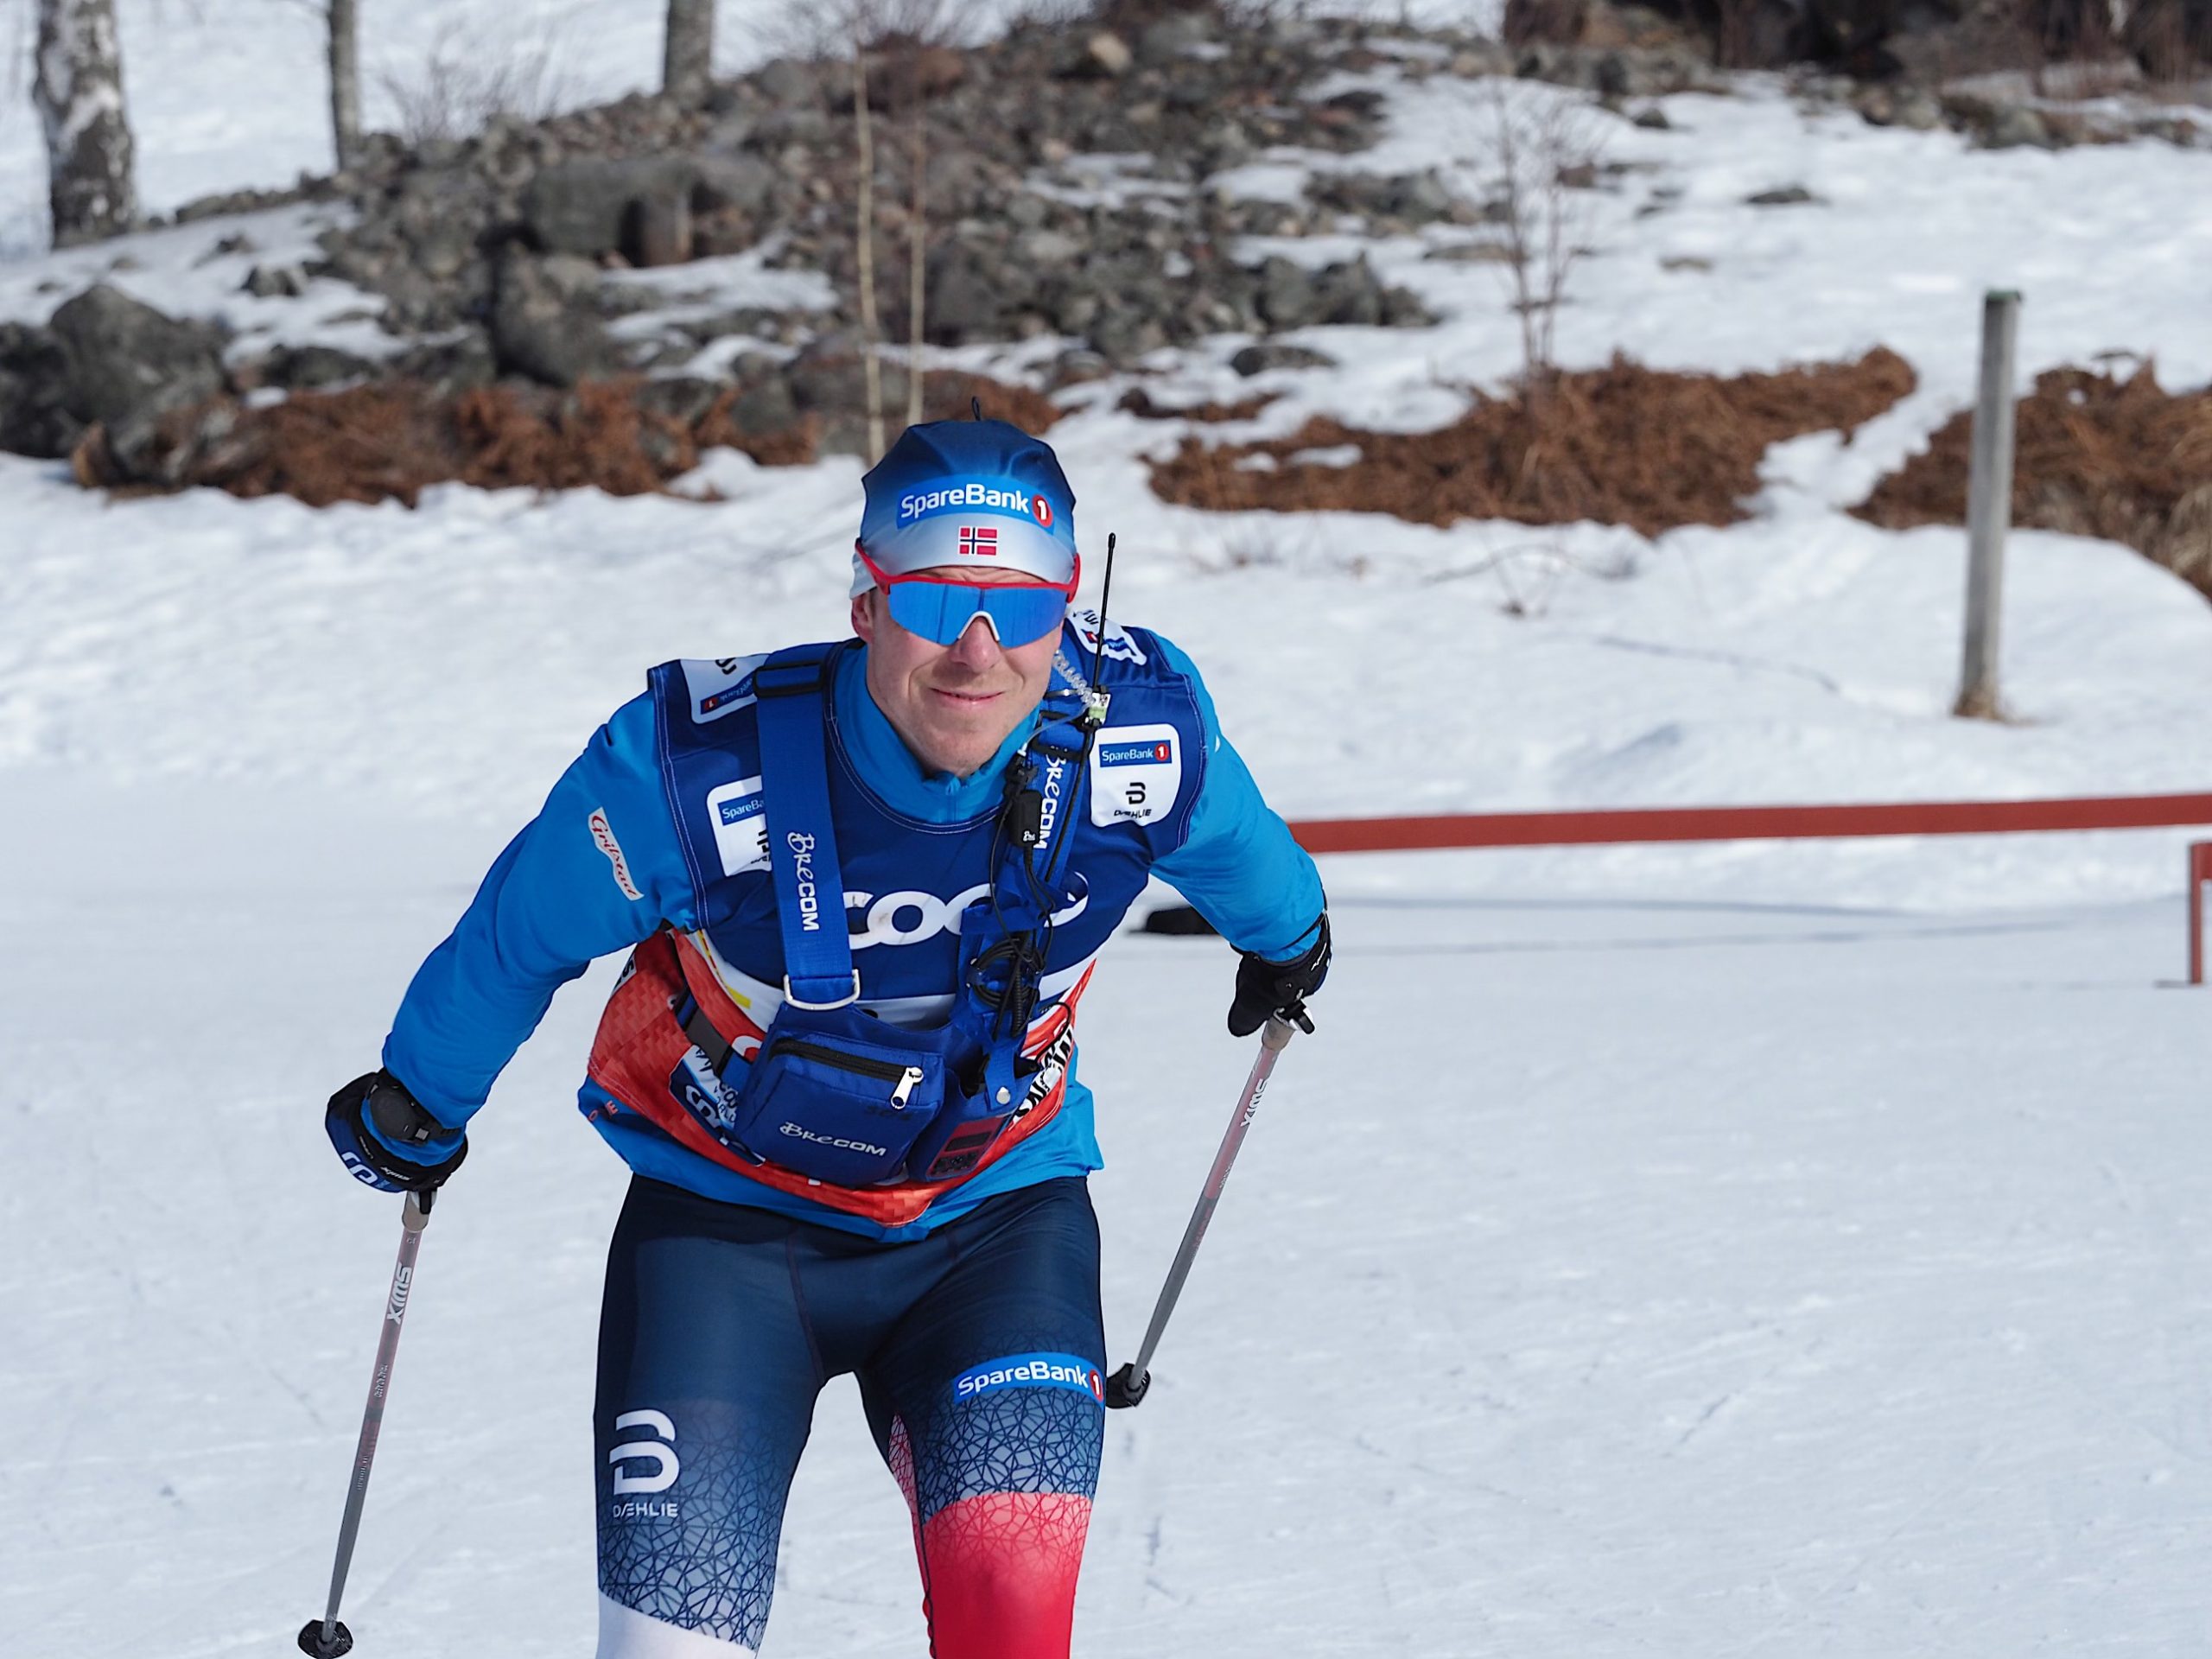 Norges smøresjef: – Systemet og samarbeid i teamet er den viktigste faktoren for gode ski